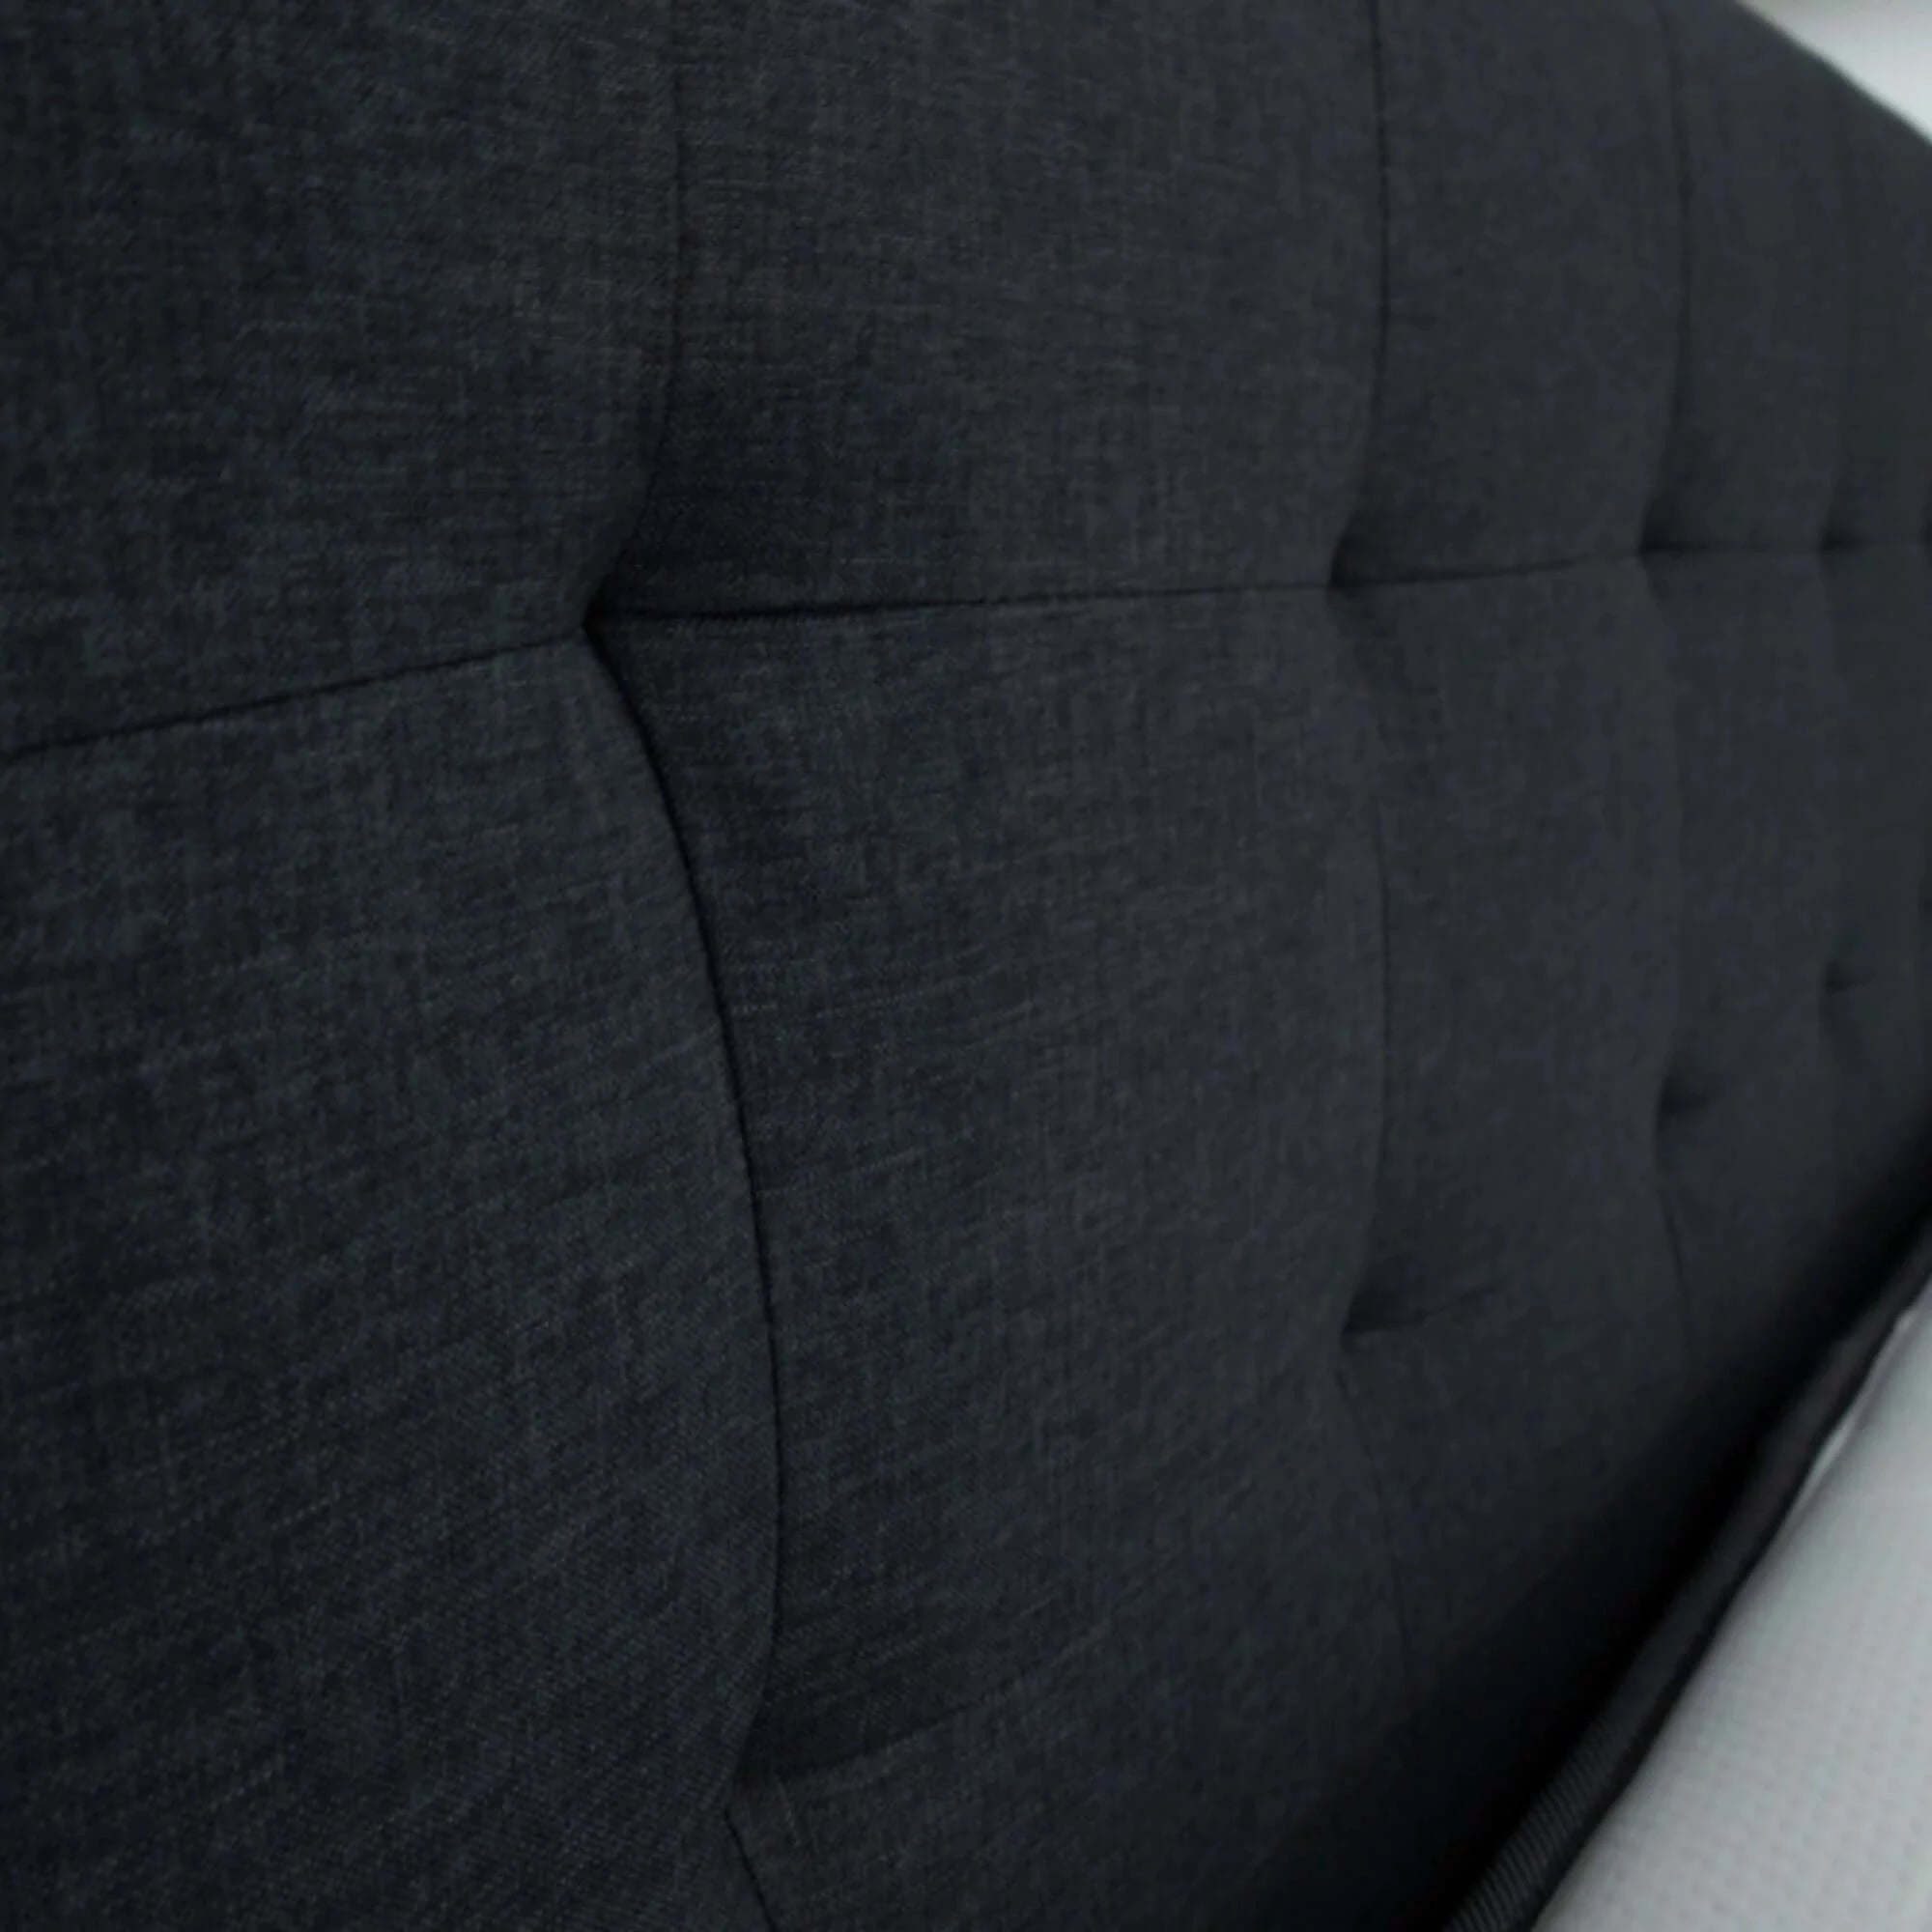 Buy volga king single bed platform frame fabric upholstered mattress base - charcoal - upinteriors-Upinteriors